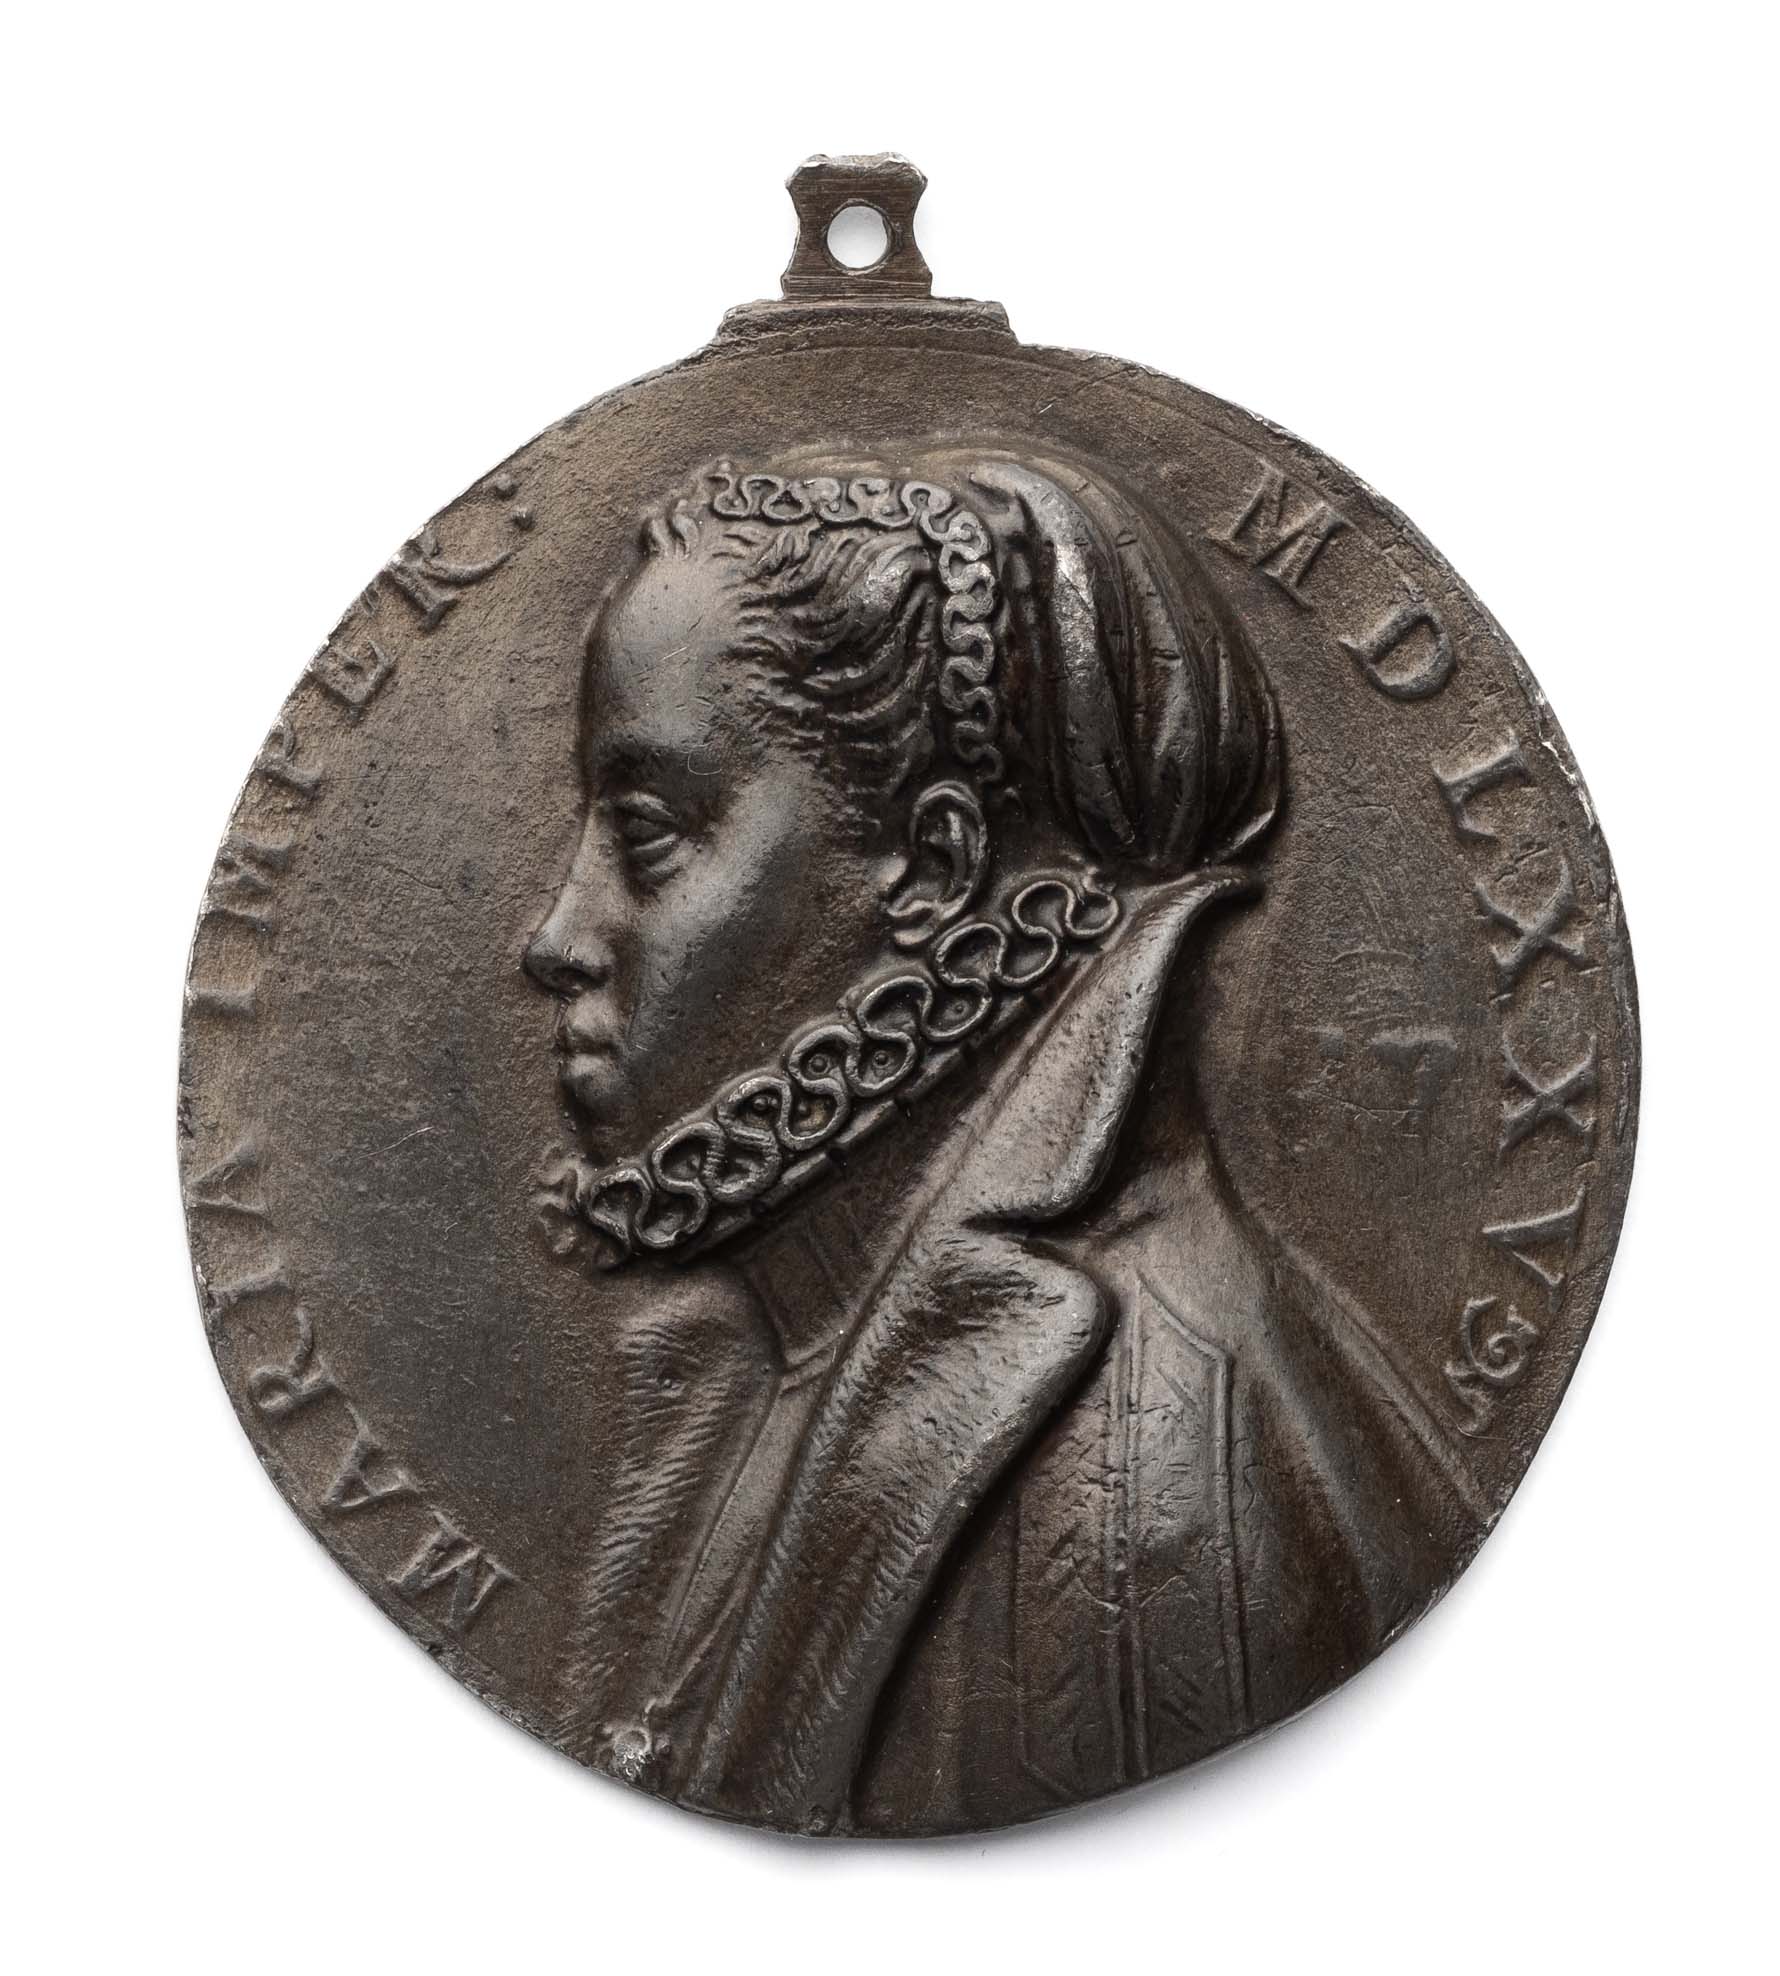 □ A SMALL MEDAL OF MARIA OF AUSTRIA, AFTER ANTONIO ABONDIO (1538-1591), 18TH / 19TH CENTURY